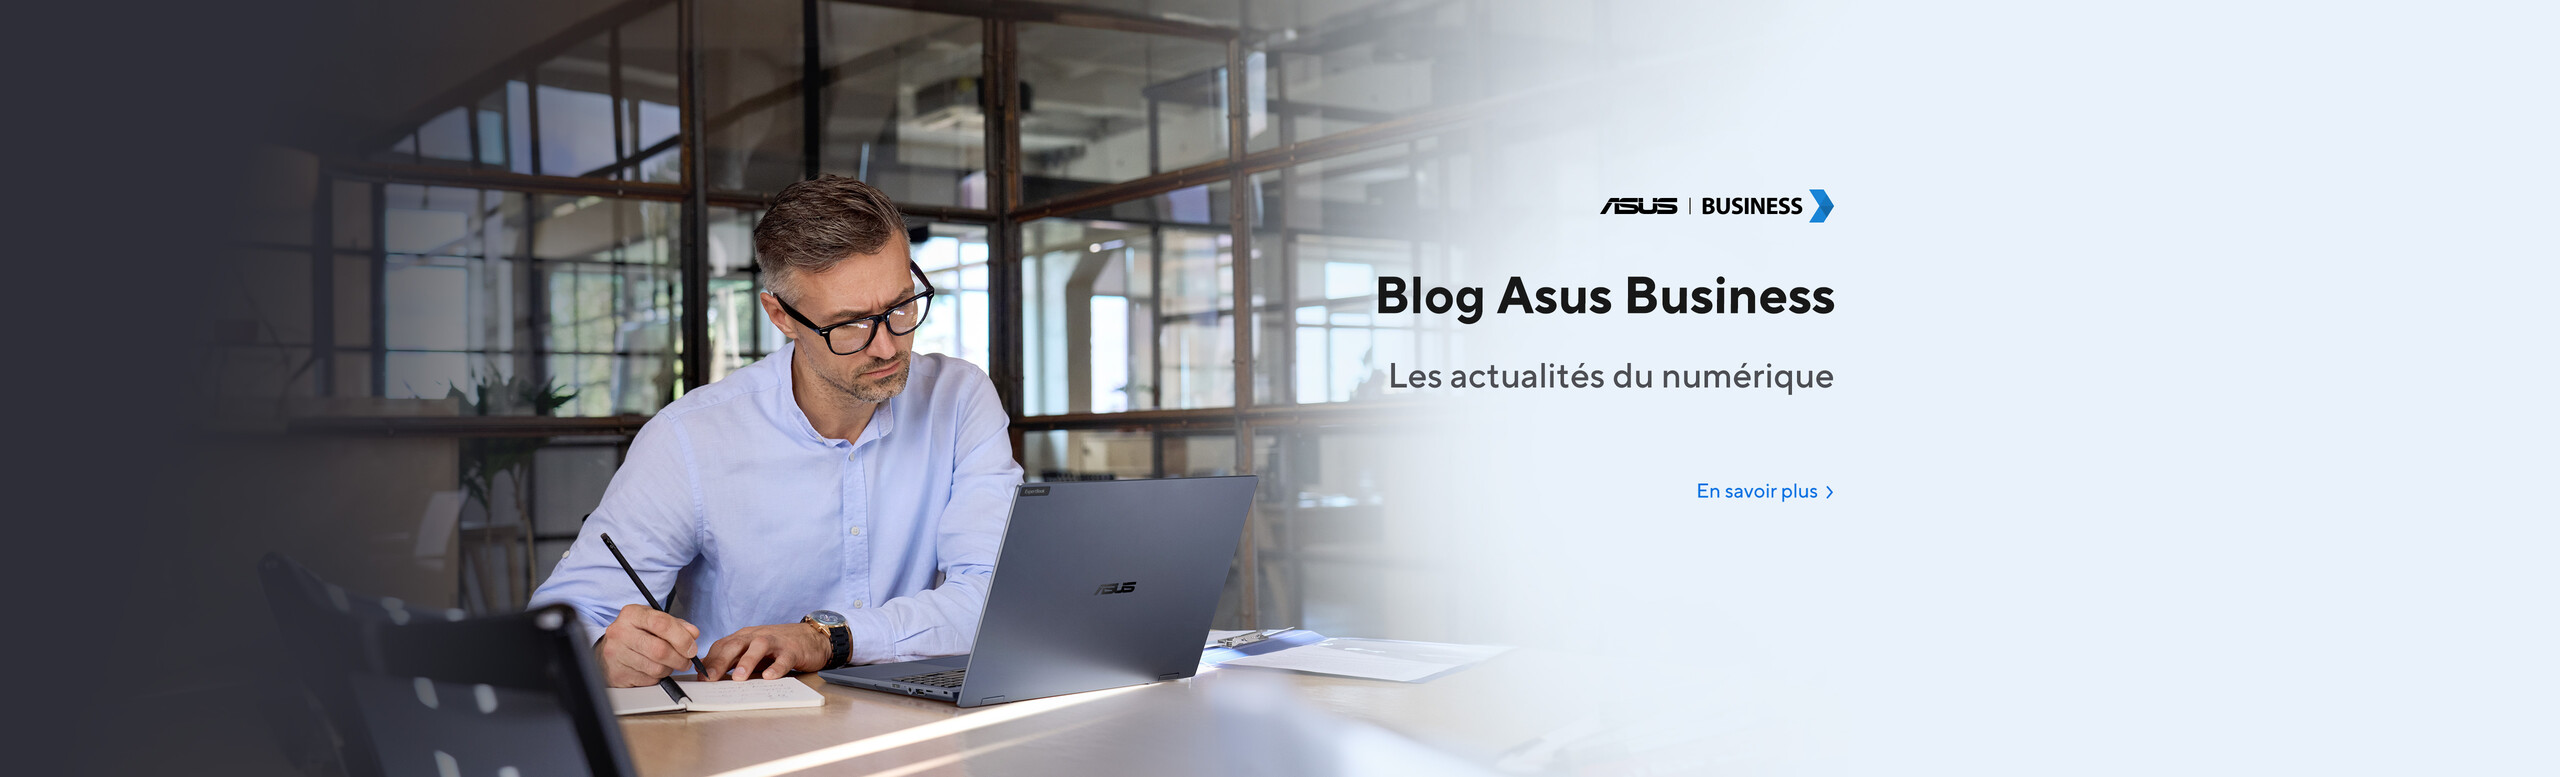 Blog Asus Business